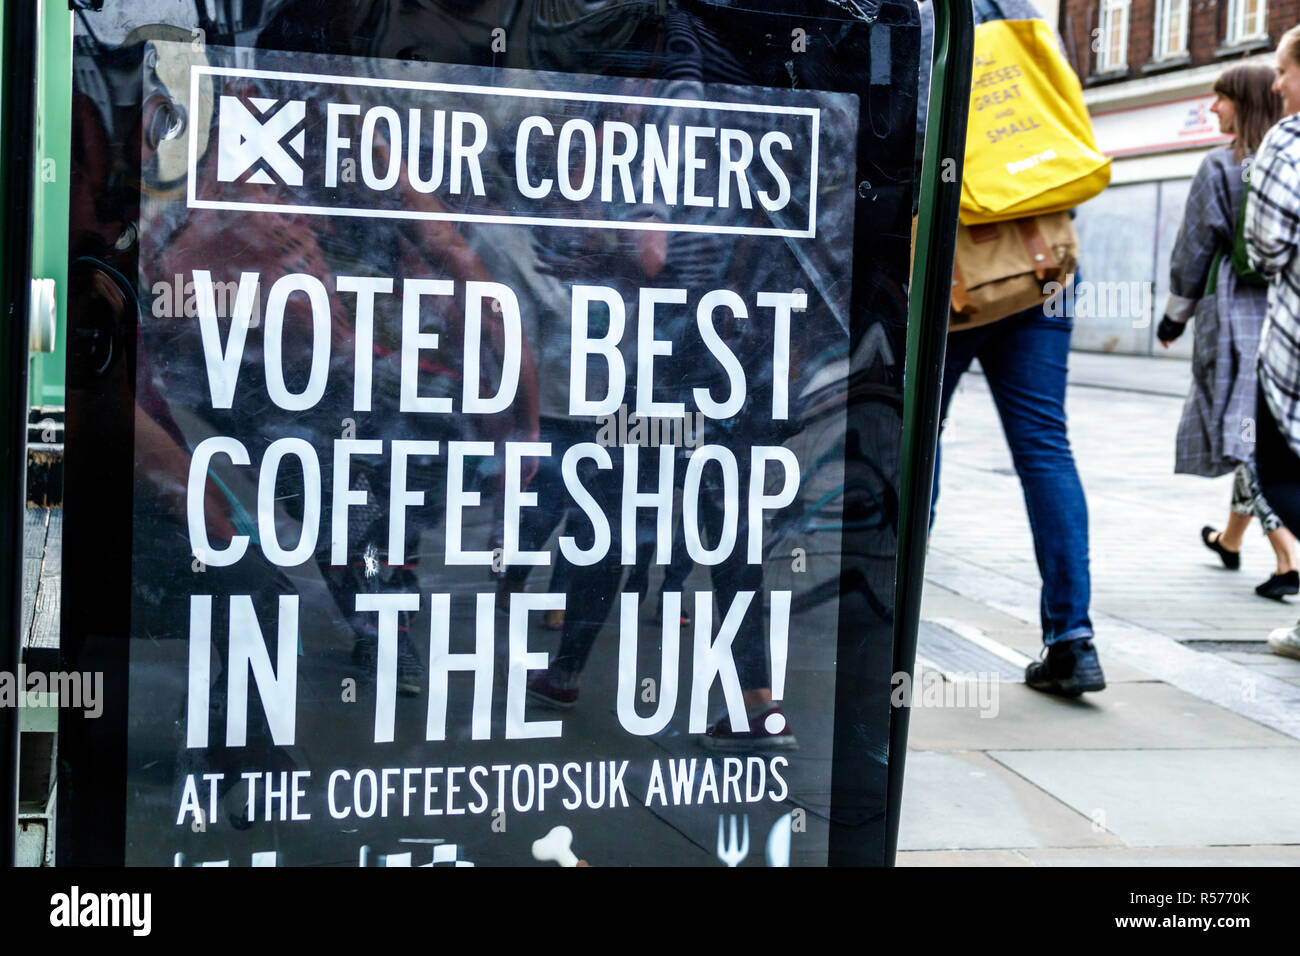 London England,UK,United Kingdom Great Britain,Lambeth South Bank,Lower Marsh,Four Corners,cafe,coffeehouse,voted best,sidewalk sign,marketing,visitor Stock Photo